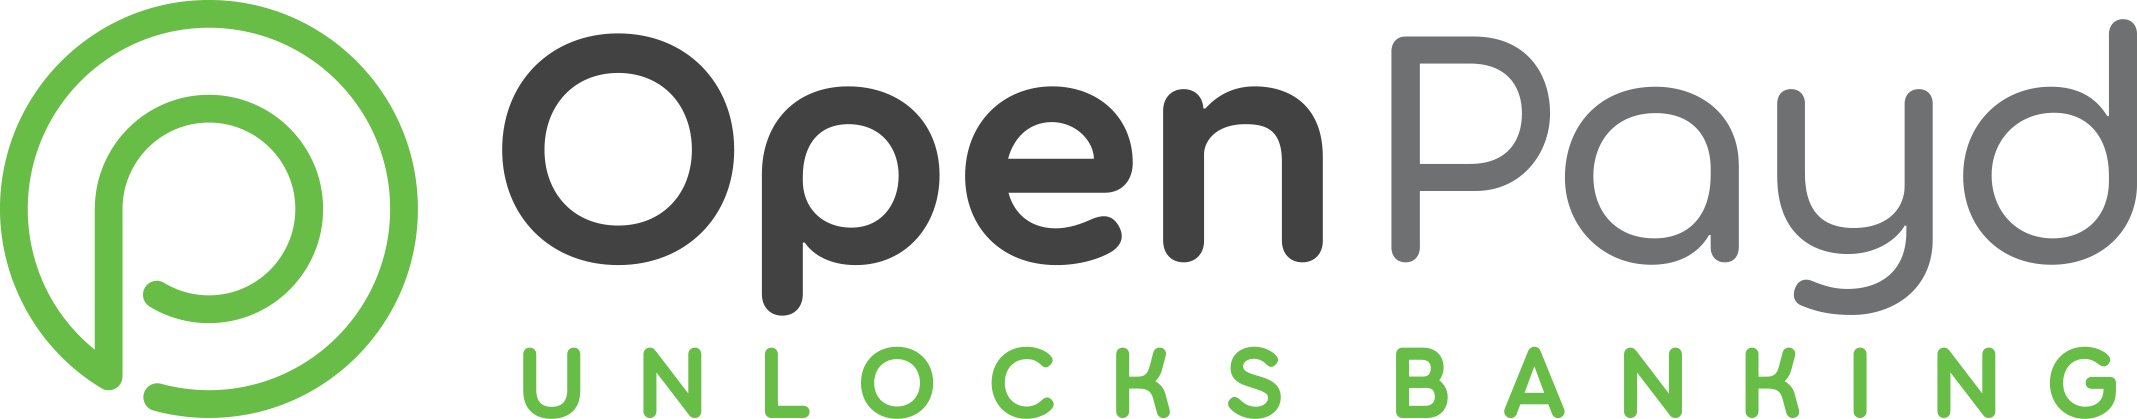 OpenPayd to Unlock Banking